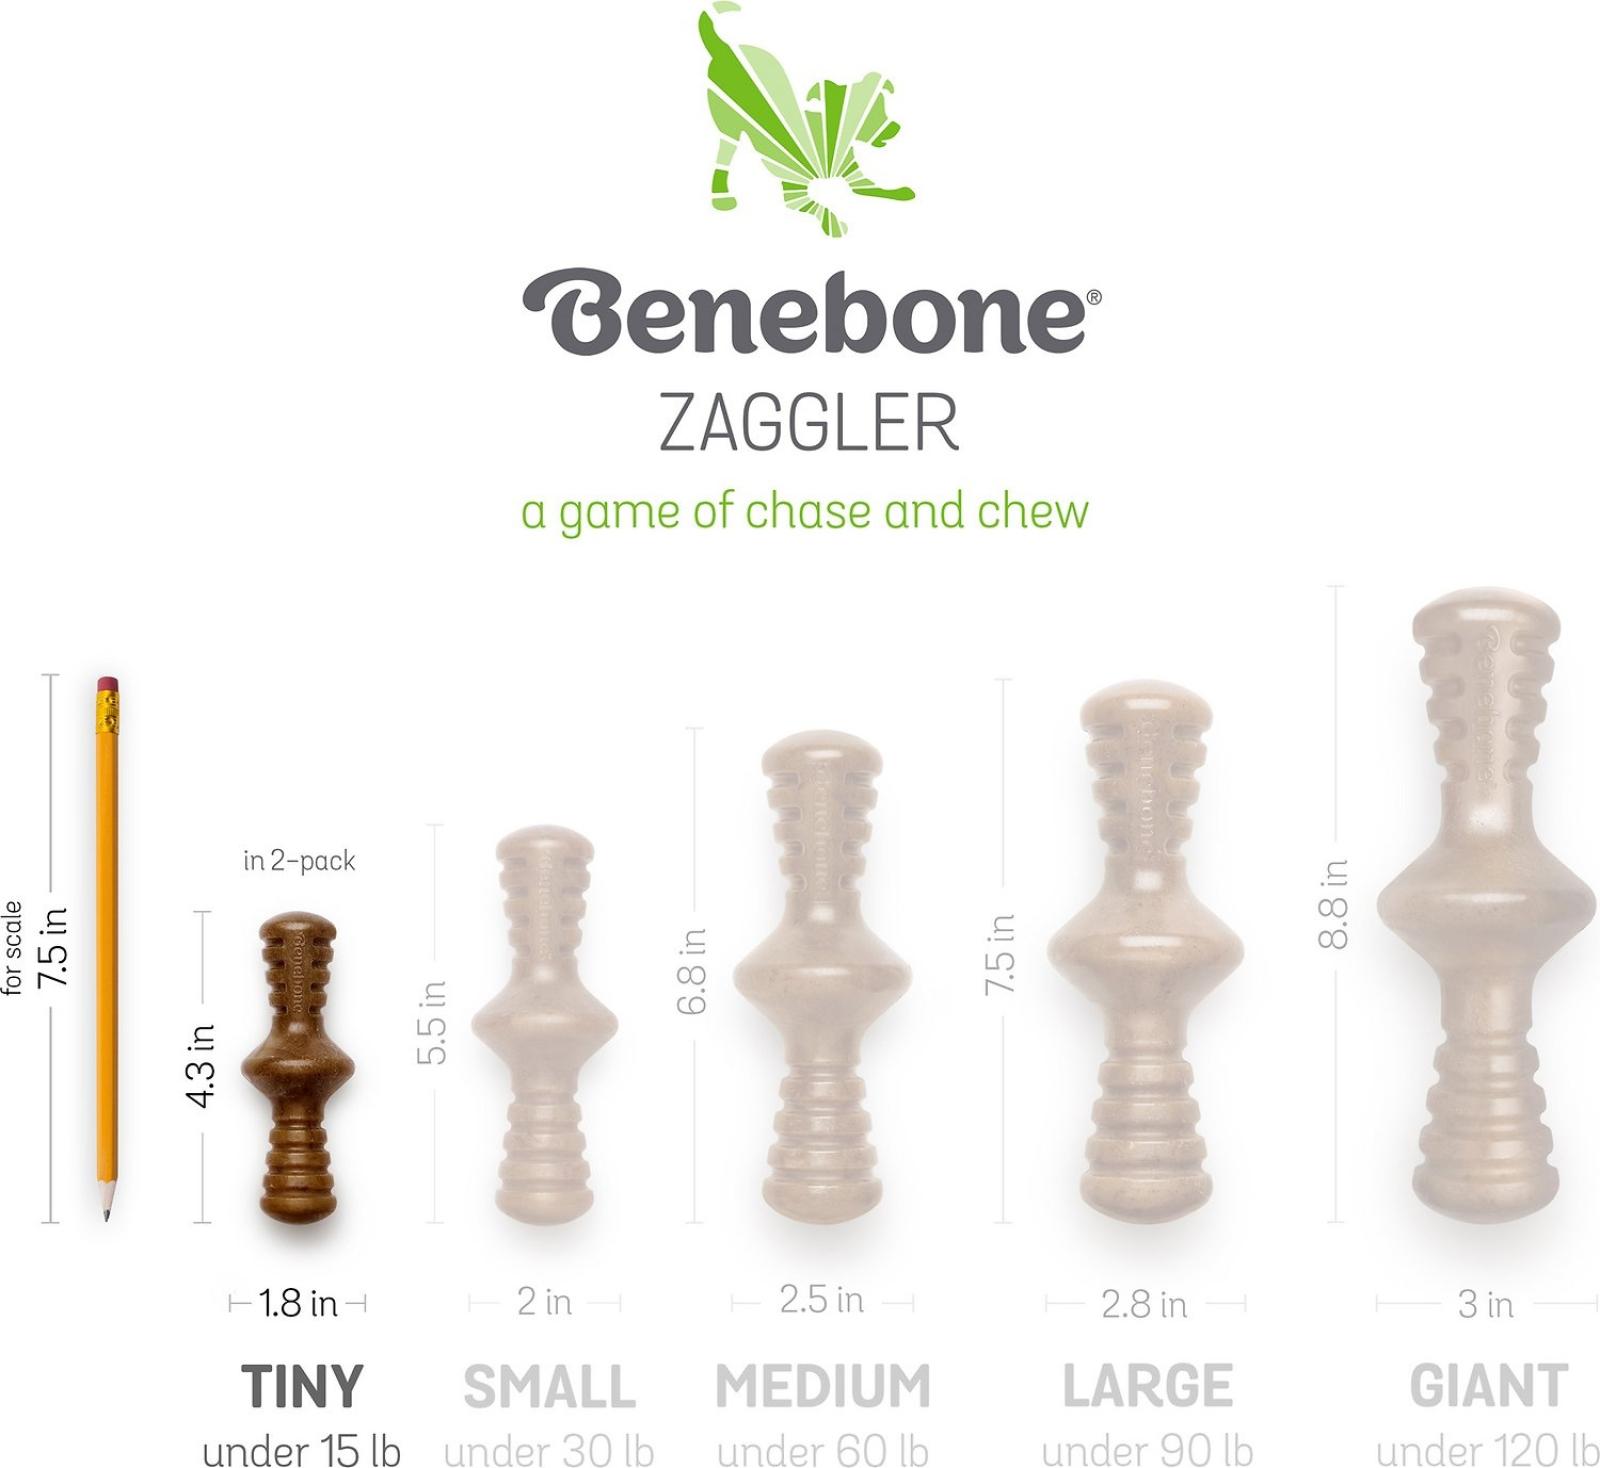 Benebone Tiny 2-Pack with Maplestick & Zaggler